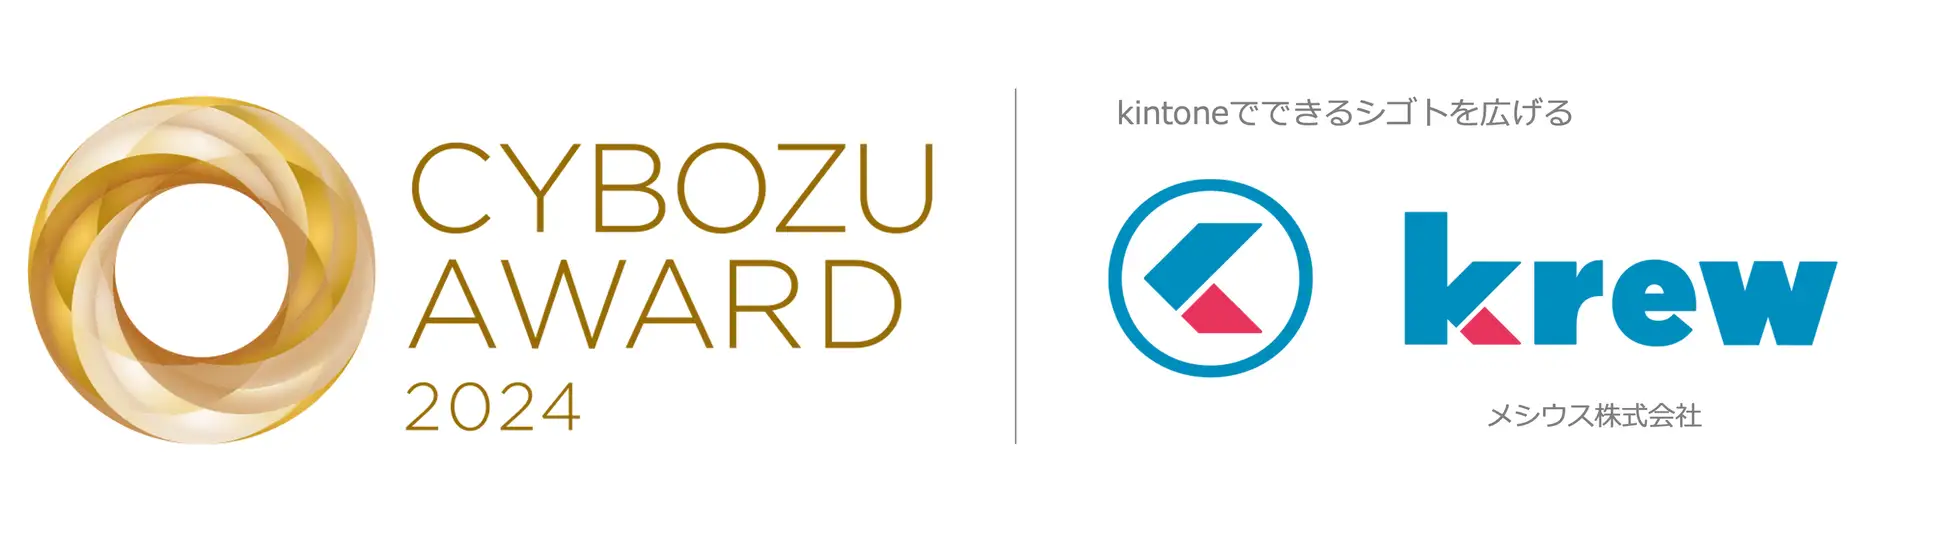 CYBOZU AWARD 2024「エクステンション部門賞」受賞